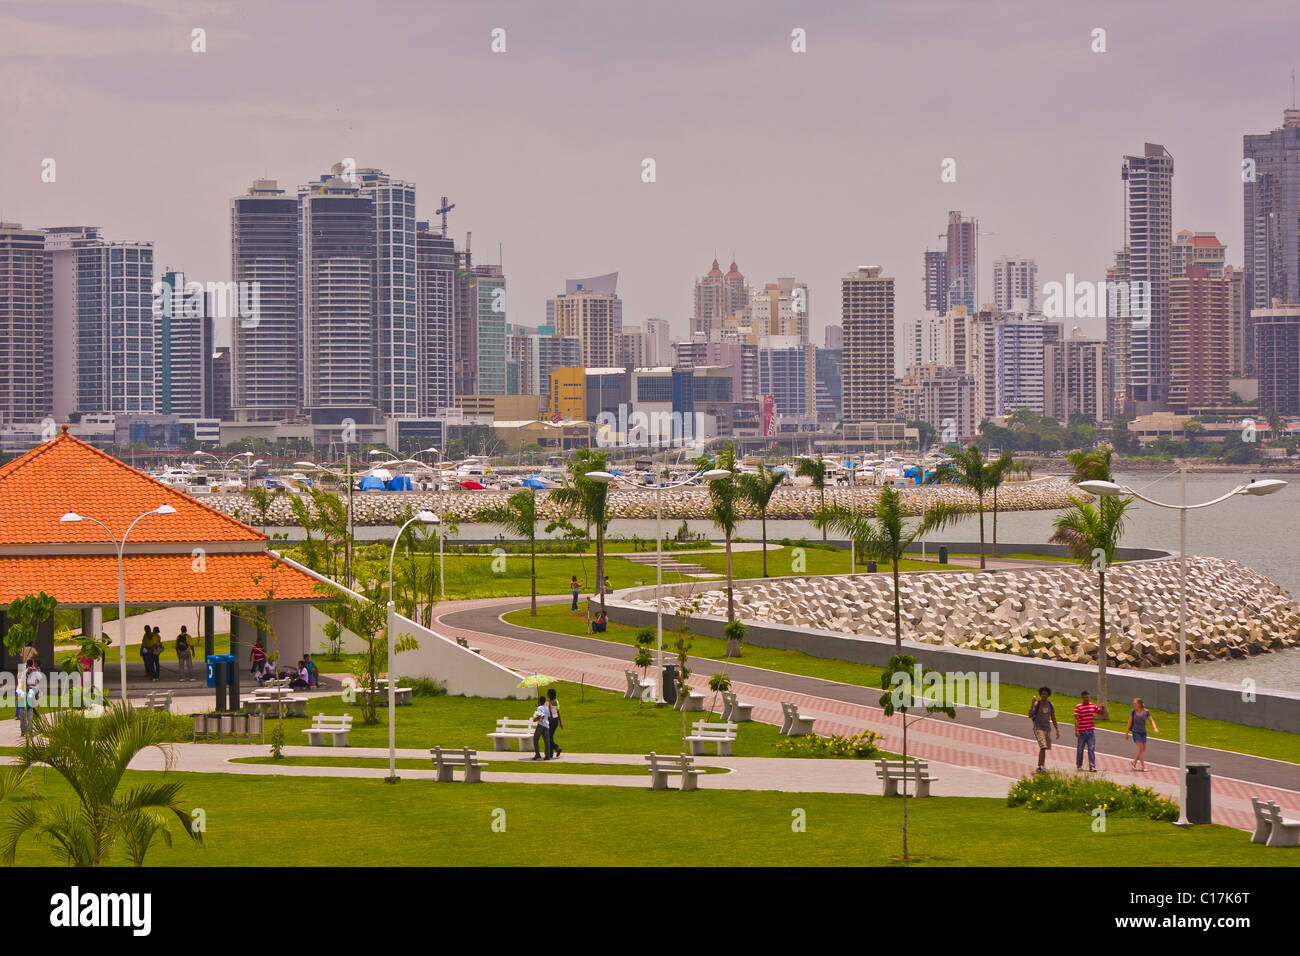 PANAMA CITY, PANAMA - Pedestrian walkway in urban park on Balboa Avenue on Panama Bay. Stock Photo